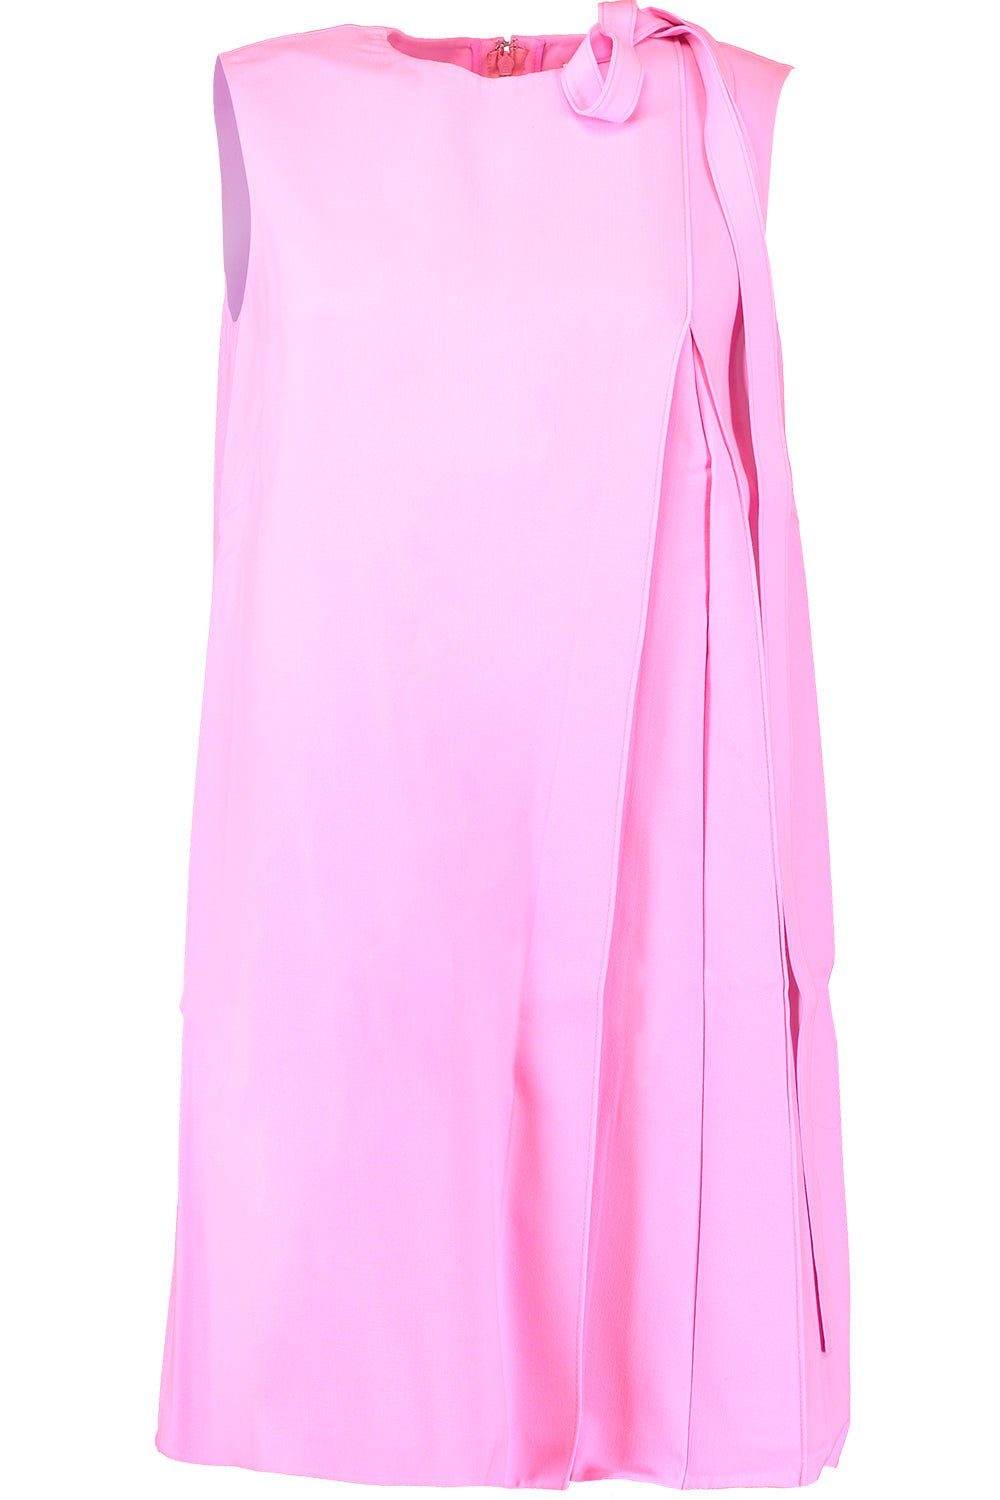 OSCAR DE LA RENTA-Bow-Embellished Crepe Mini Dress-PINK